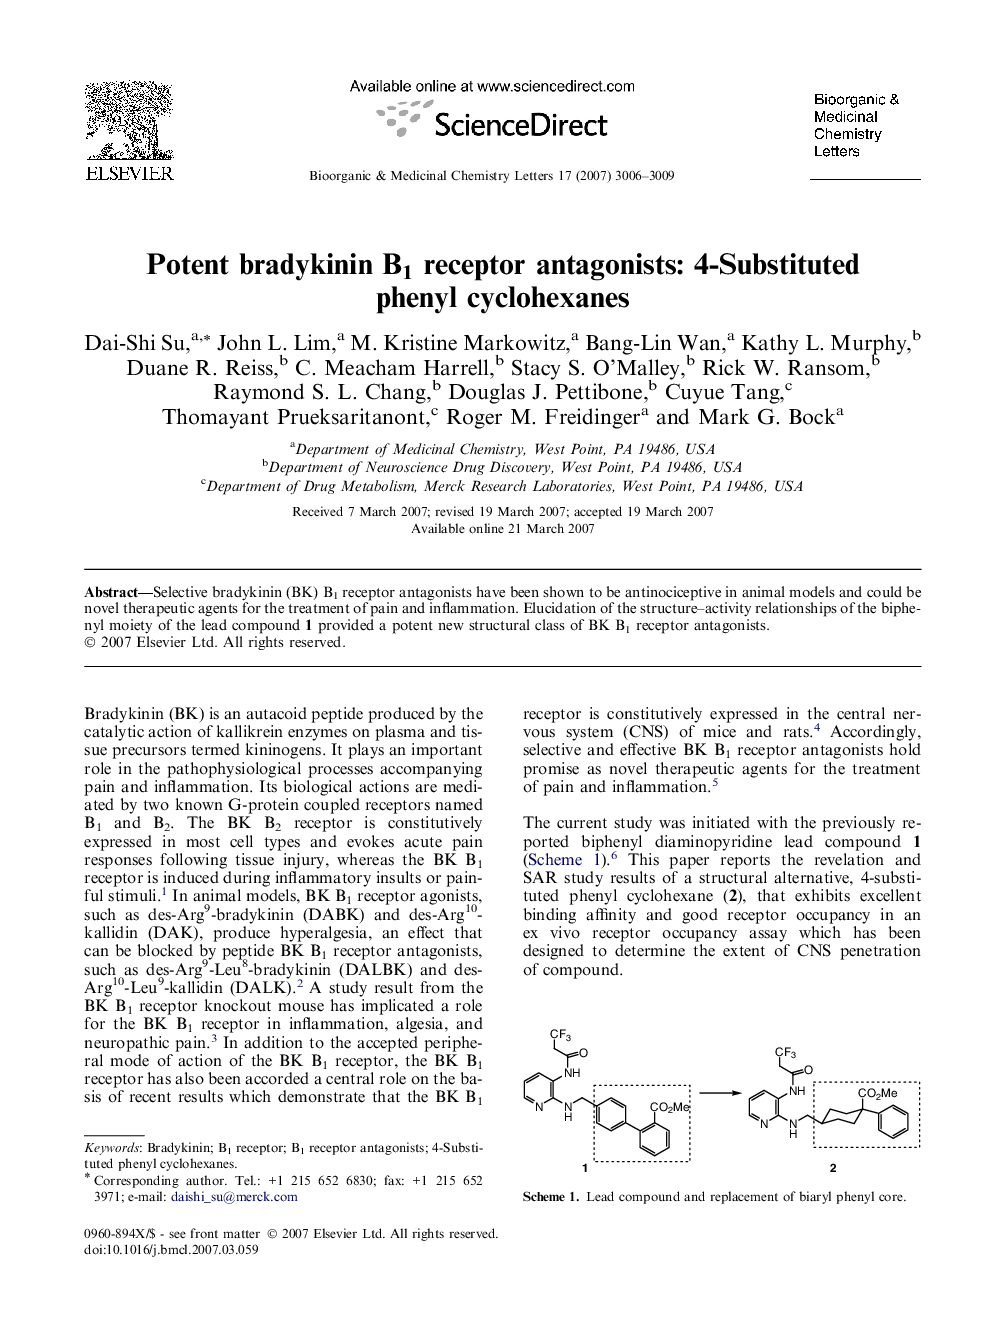 Potent bradykinin B1 receptor antagonists: 4-Substituted phenyl cyclohexanes